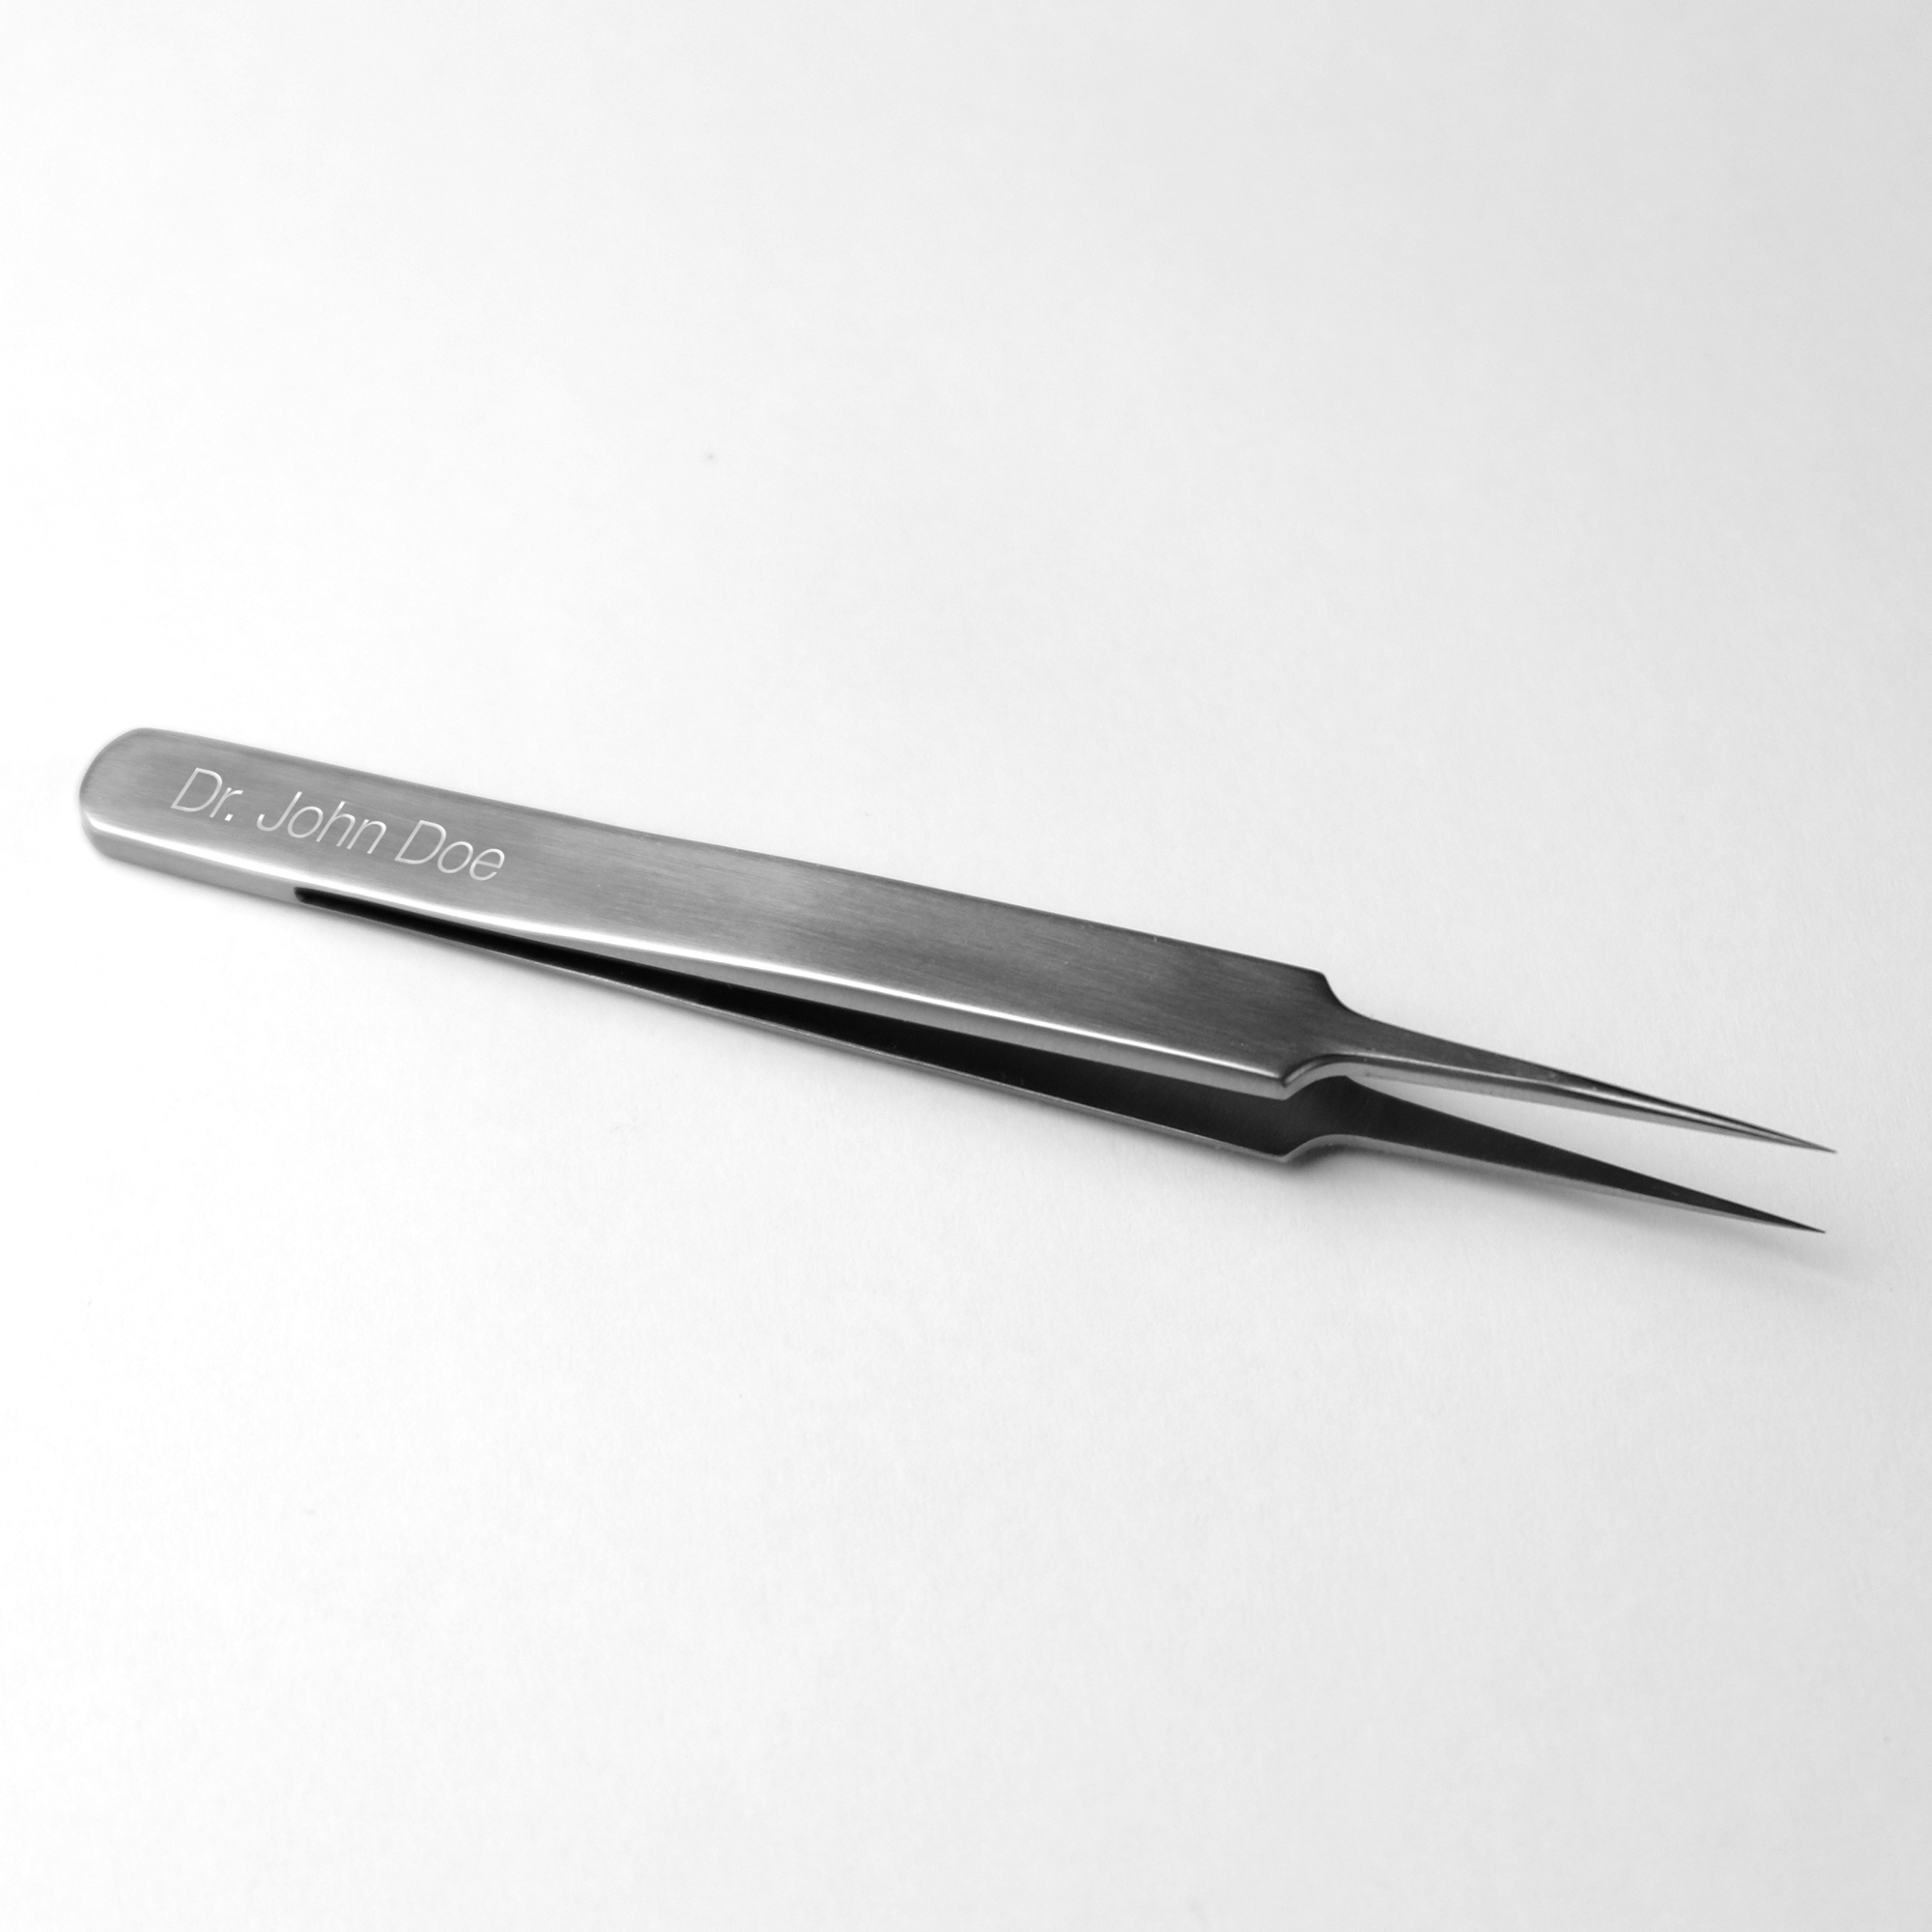 High Precision Tweezers Engraved